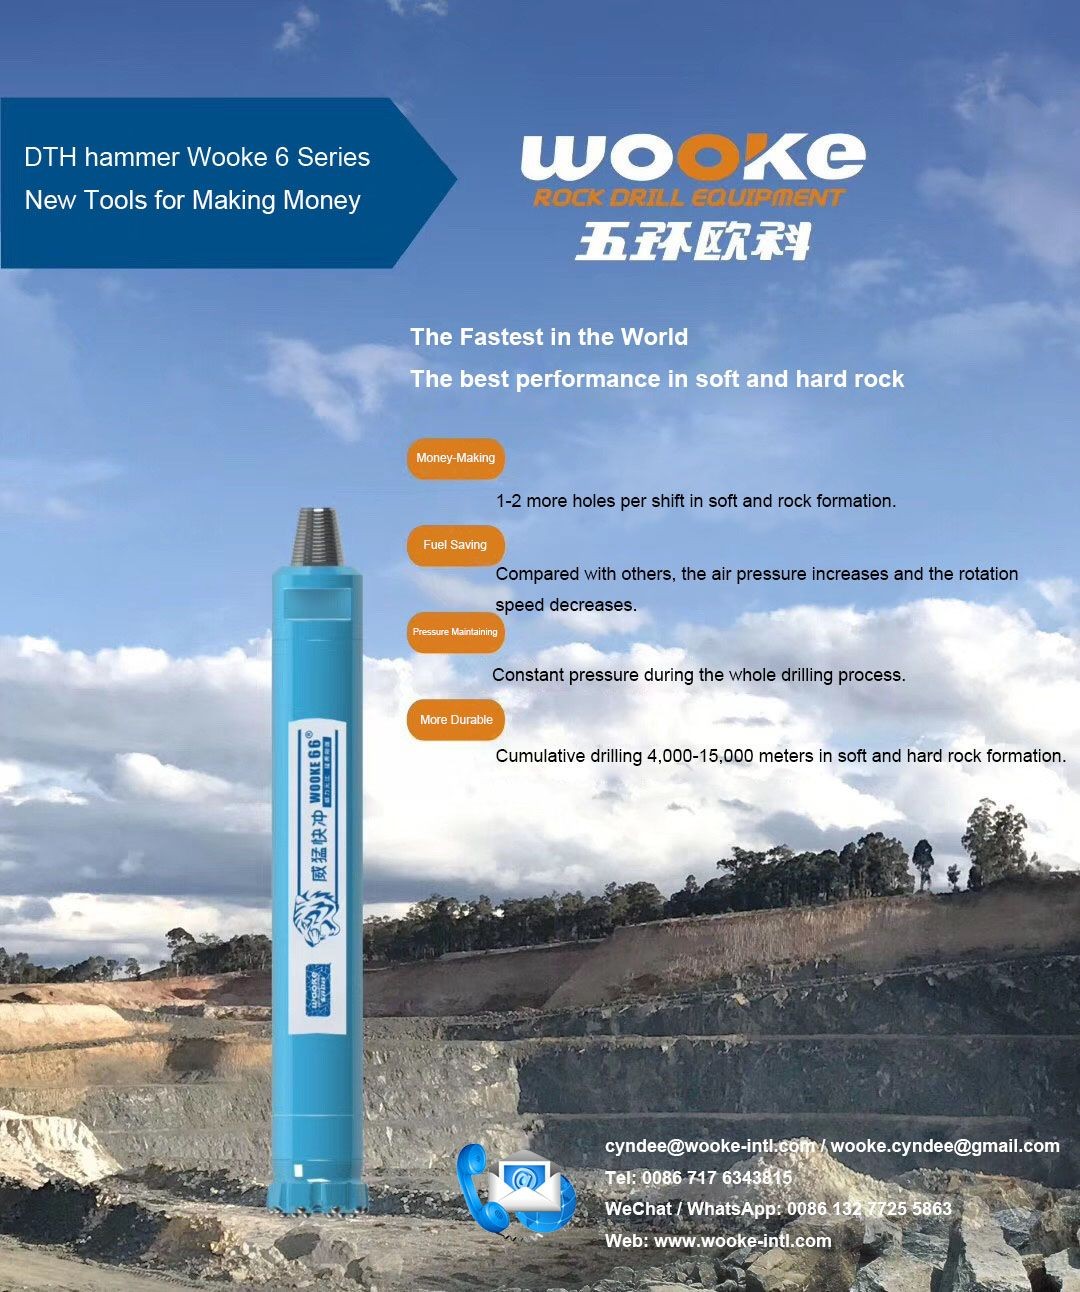 Wooke Rock Drill Equipment CO., Ltd